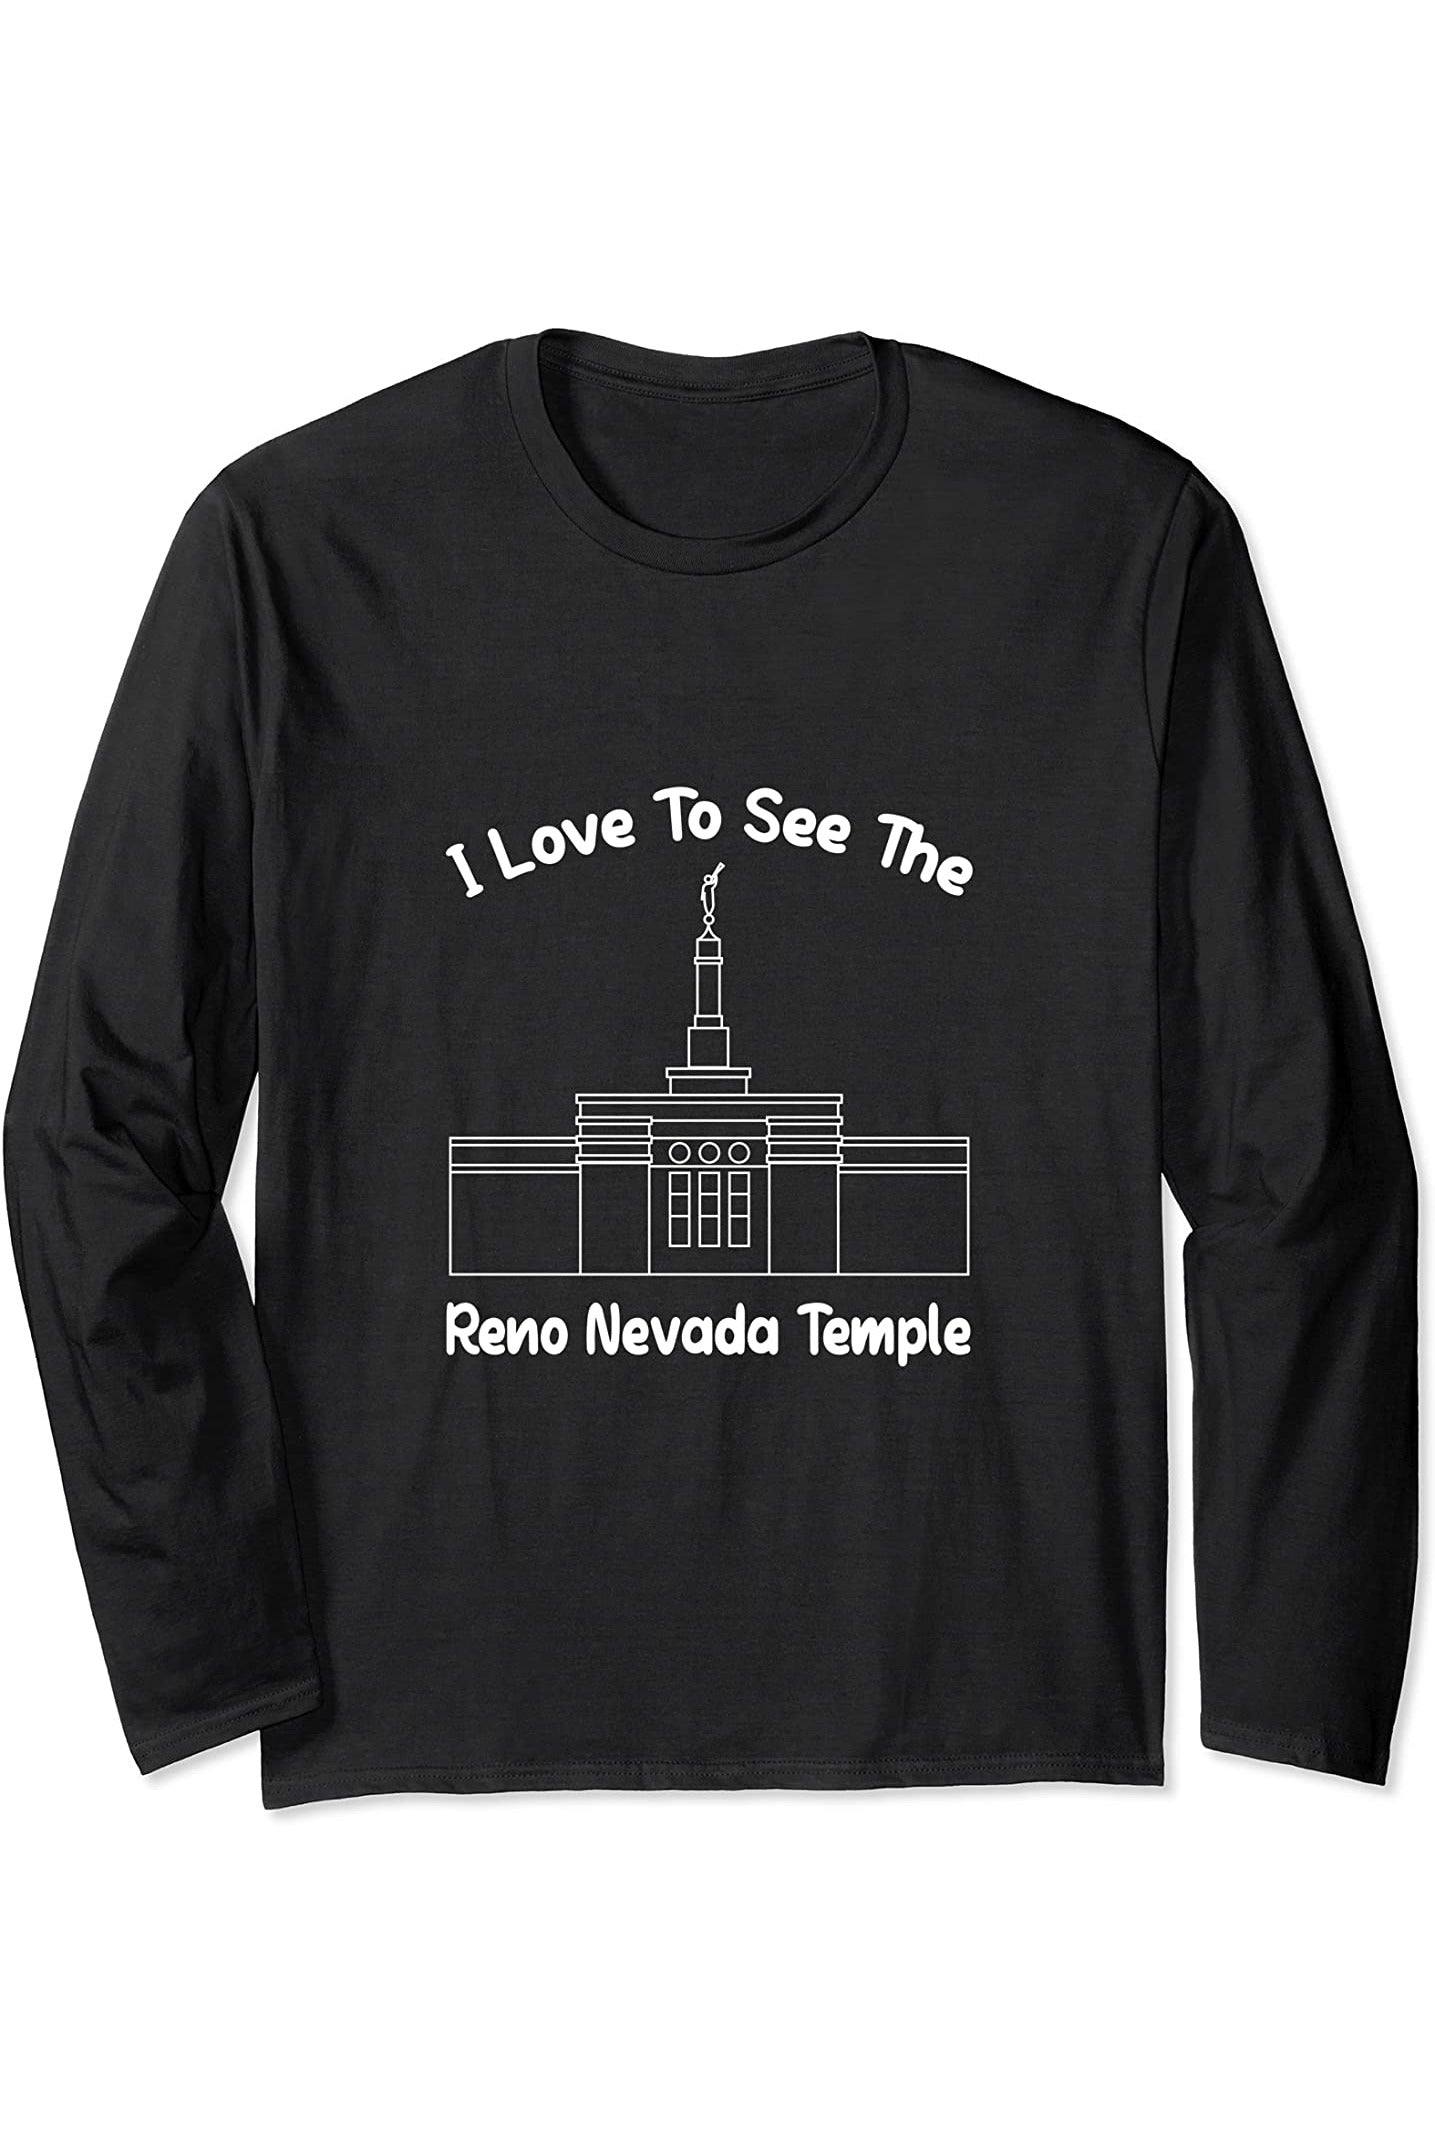 Reno Nevada Temple Long Sleeve T-Shirt - Primary Style (English) US